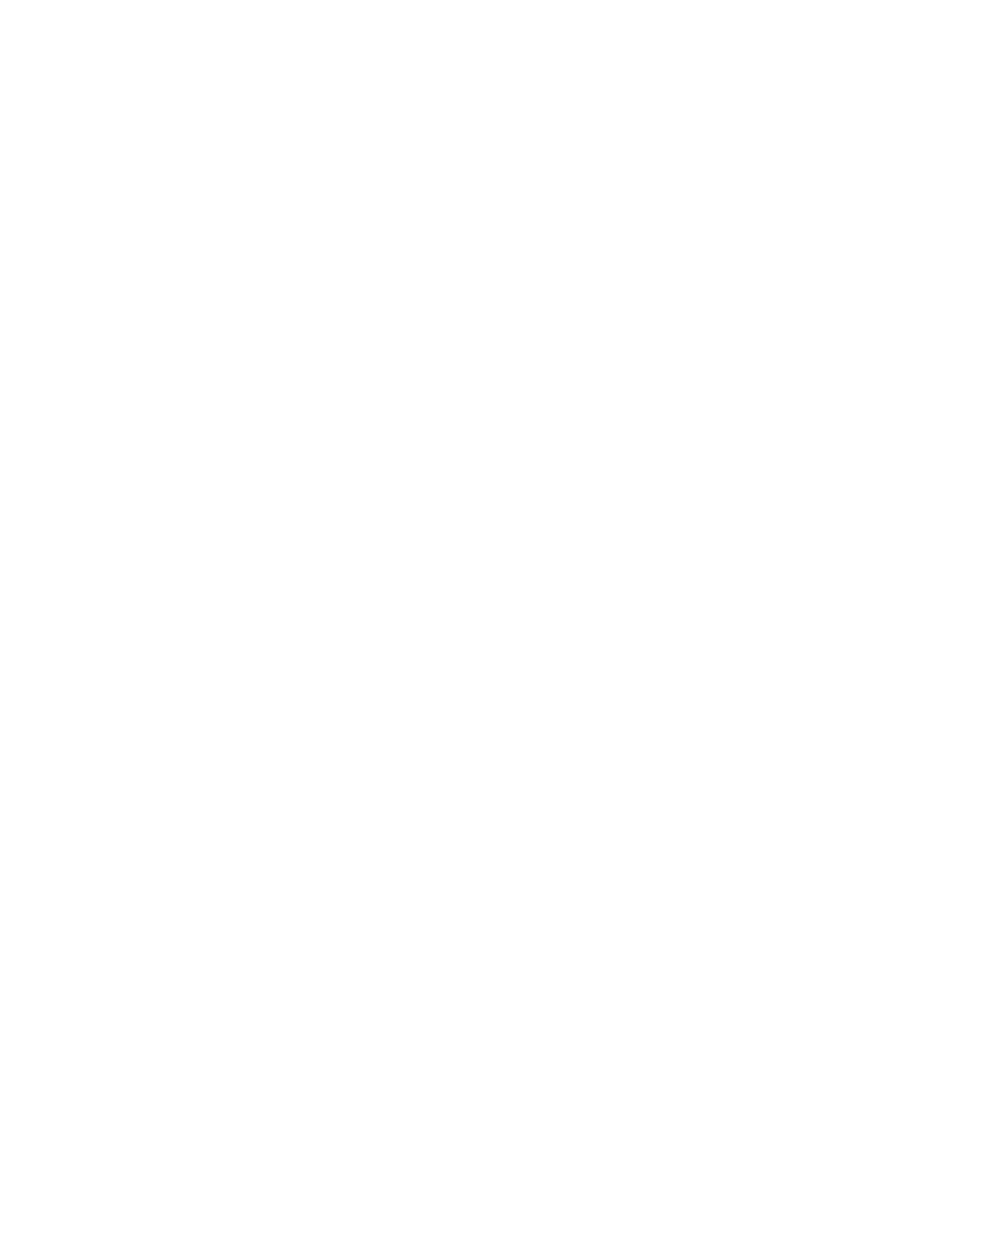 Radio Centro Idea